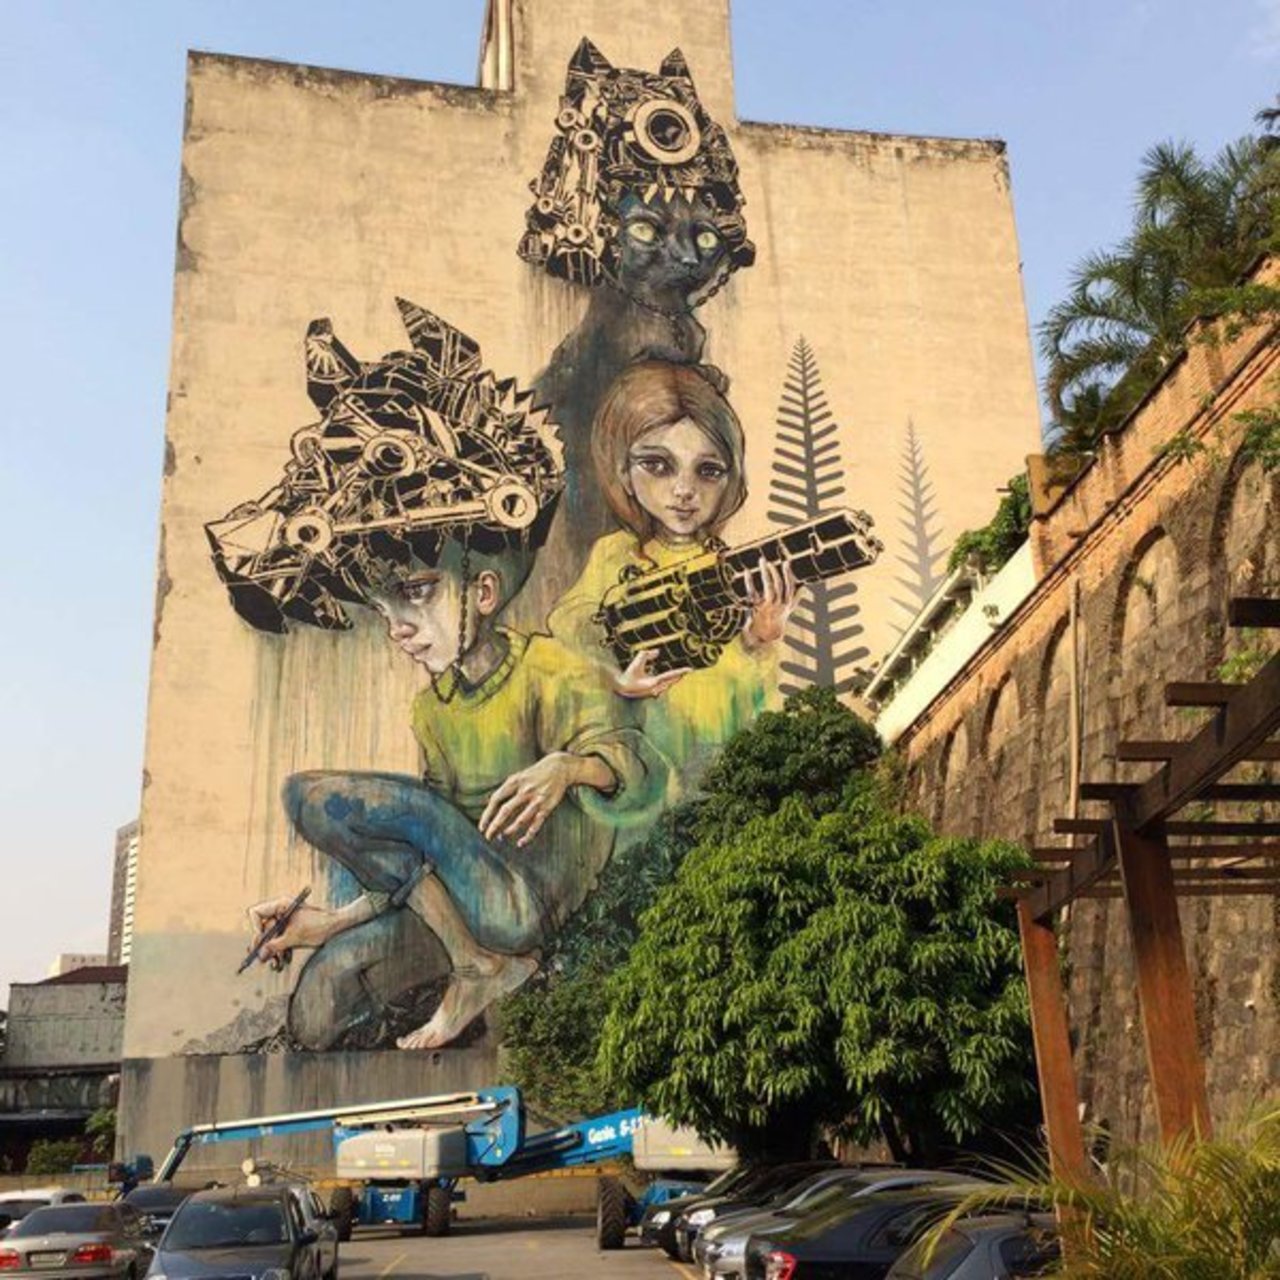 A little haunting, but beautiful! RT @CmoaXWoman: Herakut #streetart #urbanart #art #graffiti https://t.co/6lVq4ITNEN